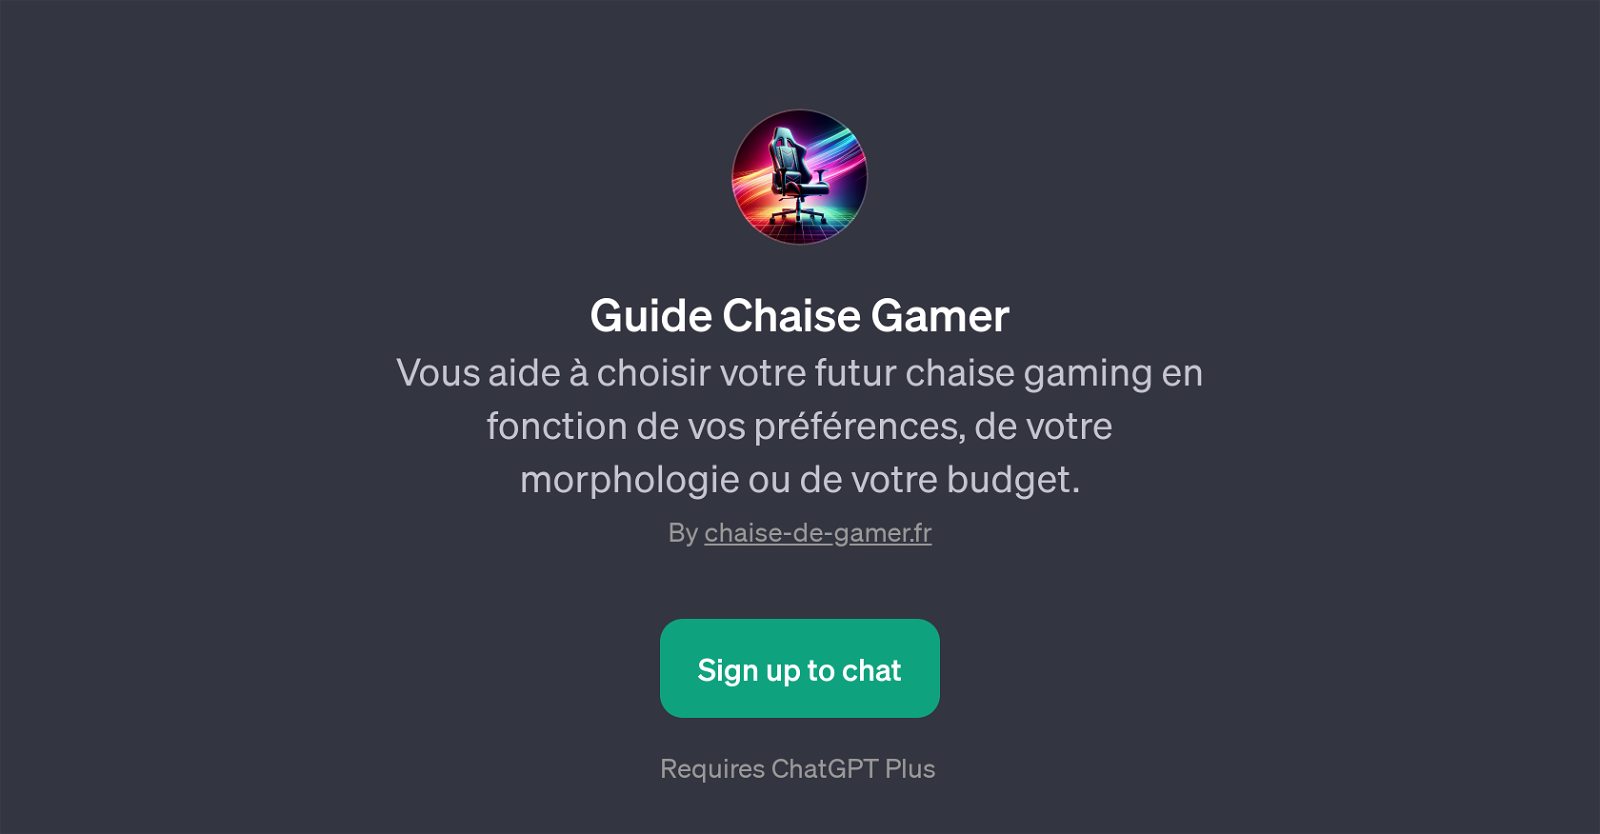 Guide Chaise Gamer website